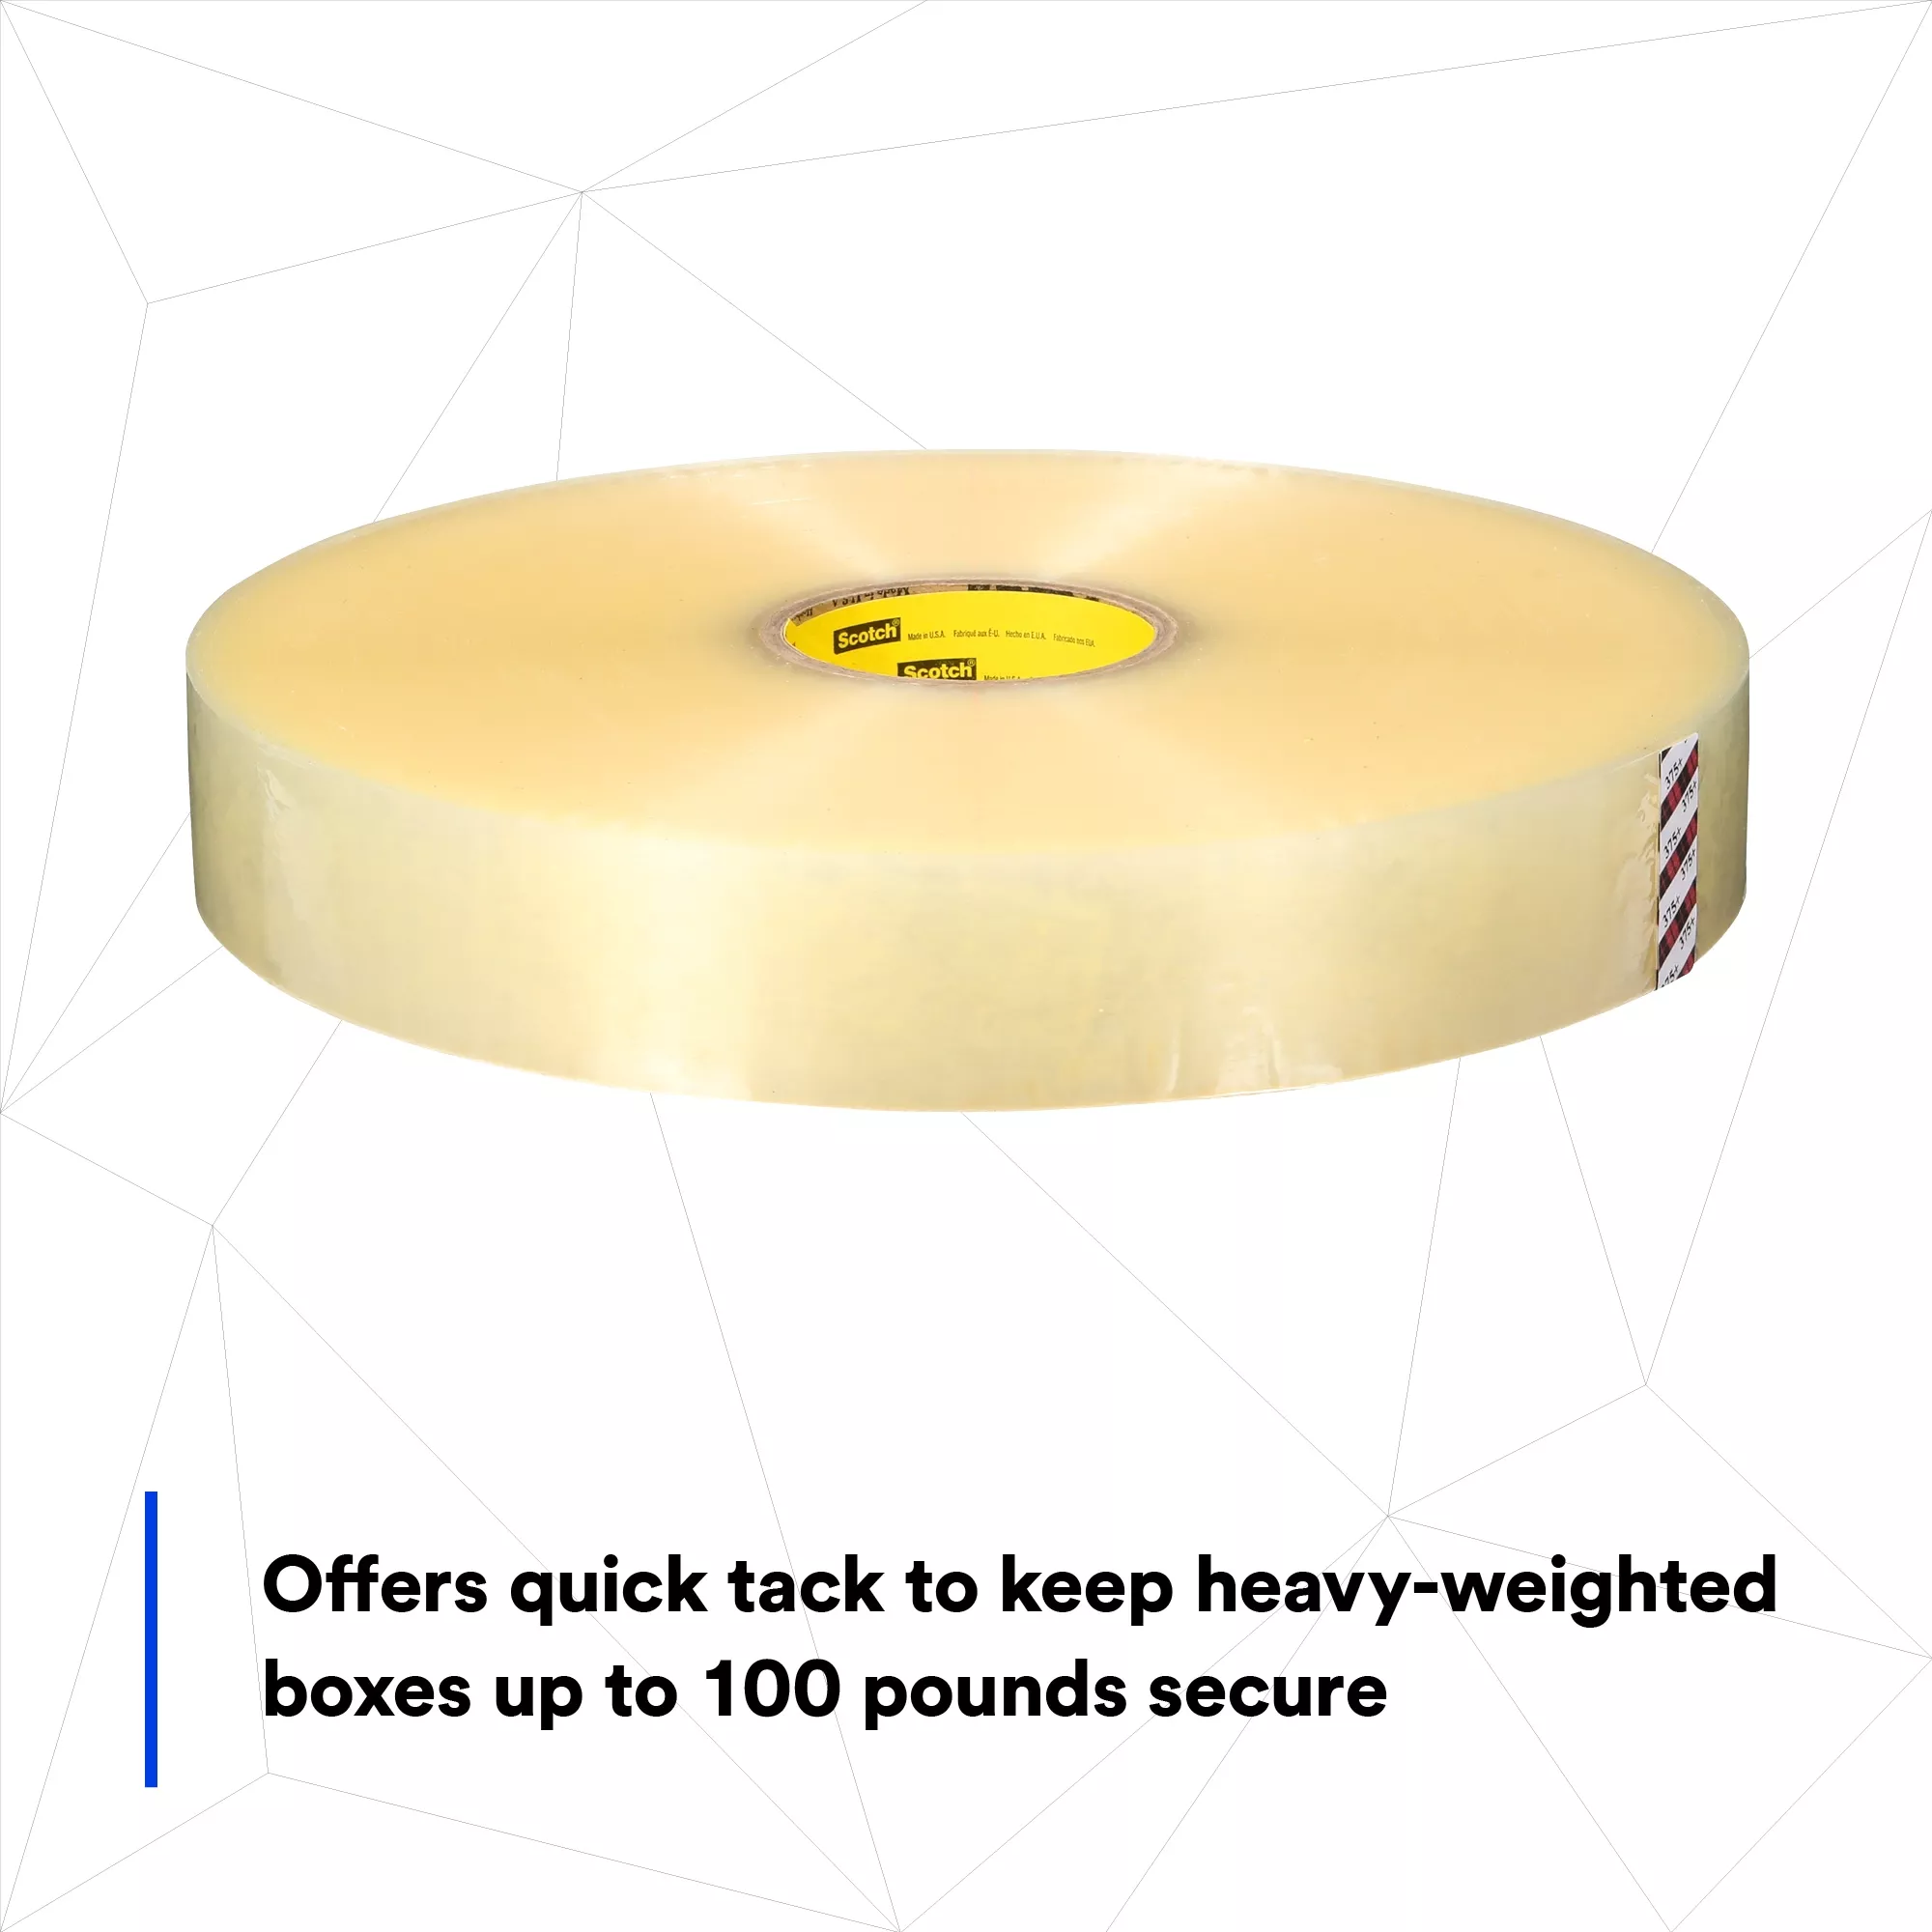 SKU 7100215511 | Scotch® High Tack Box Sealing Tape 375+